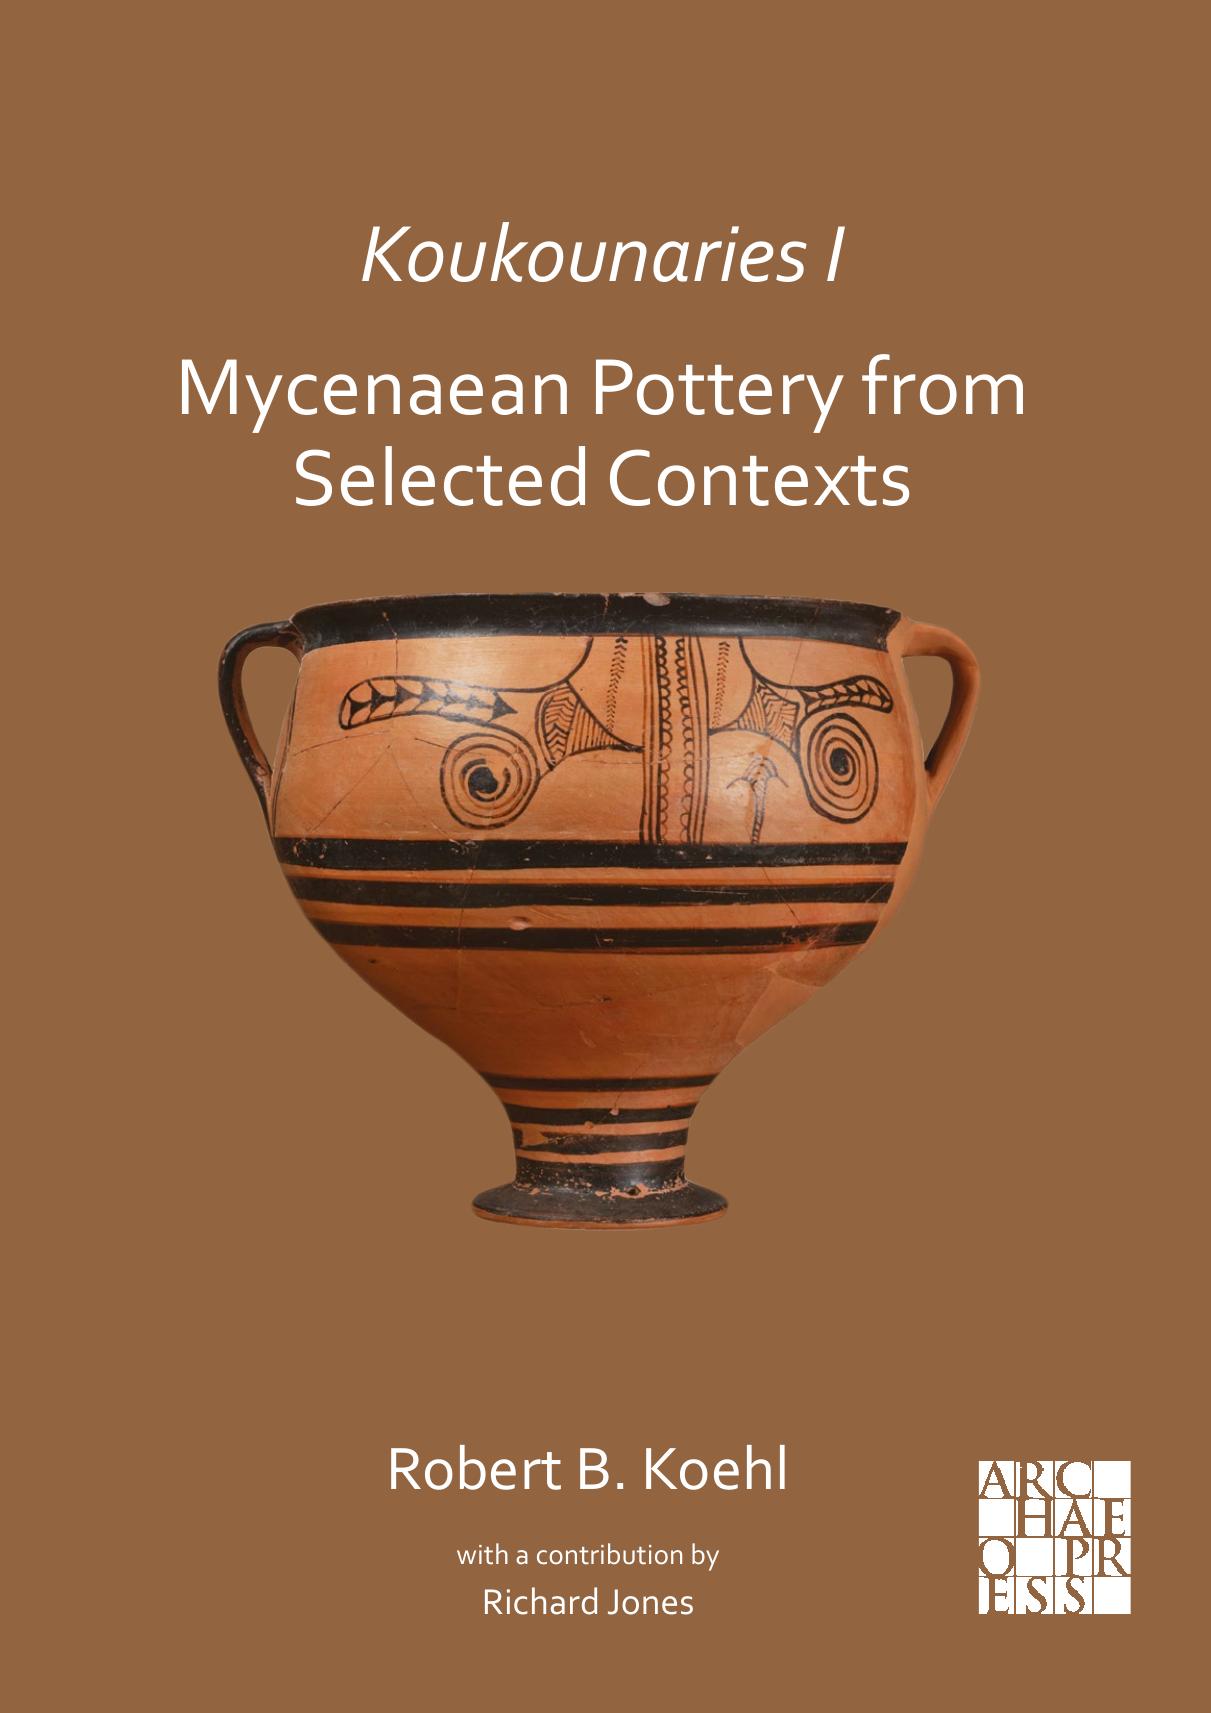 Koukounaries I: Mycenaean Pottery from Selected Contexts by Robert B. Koehl